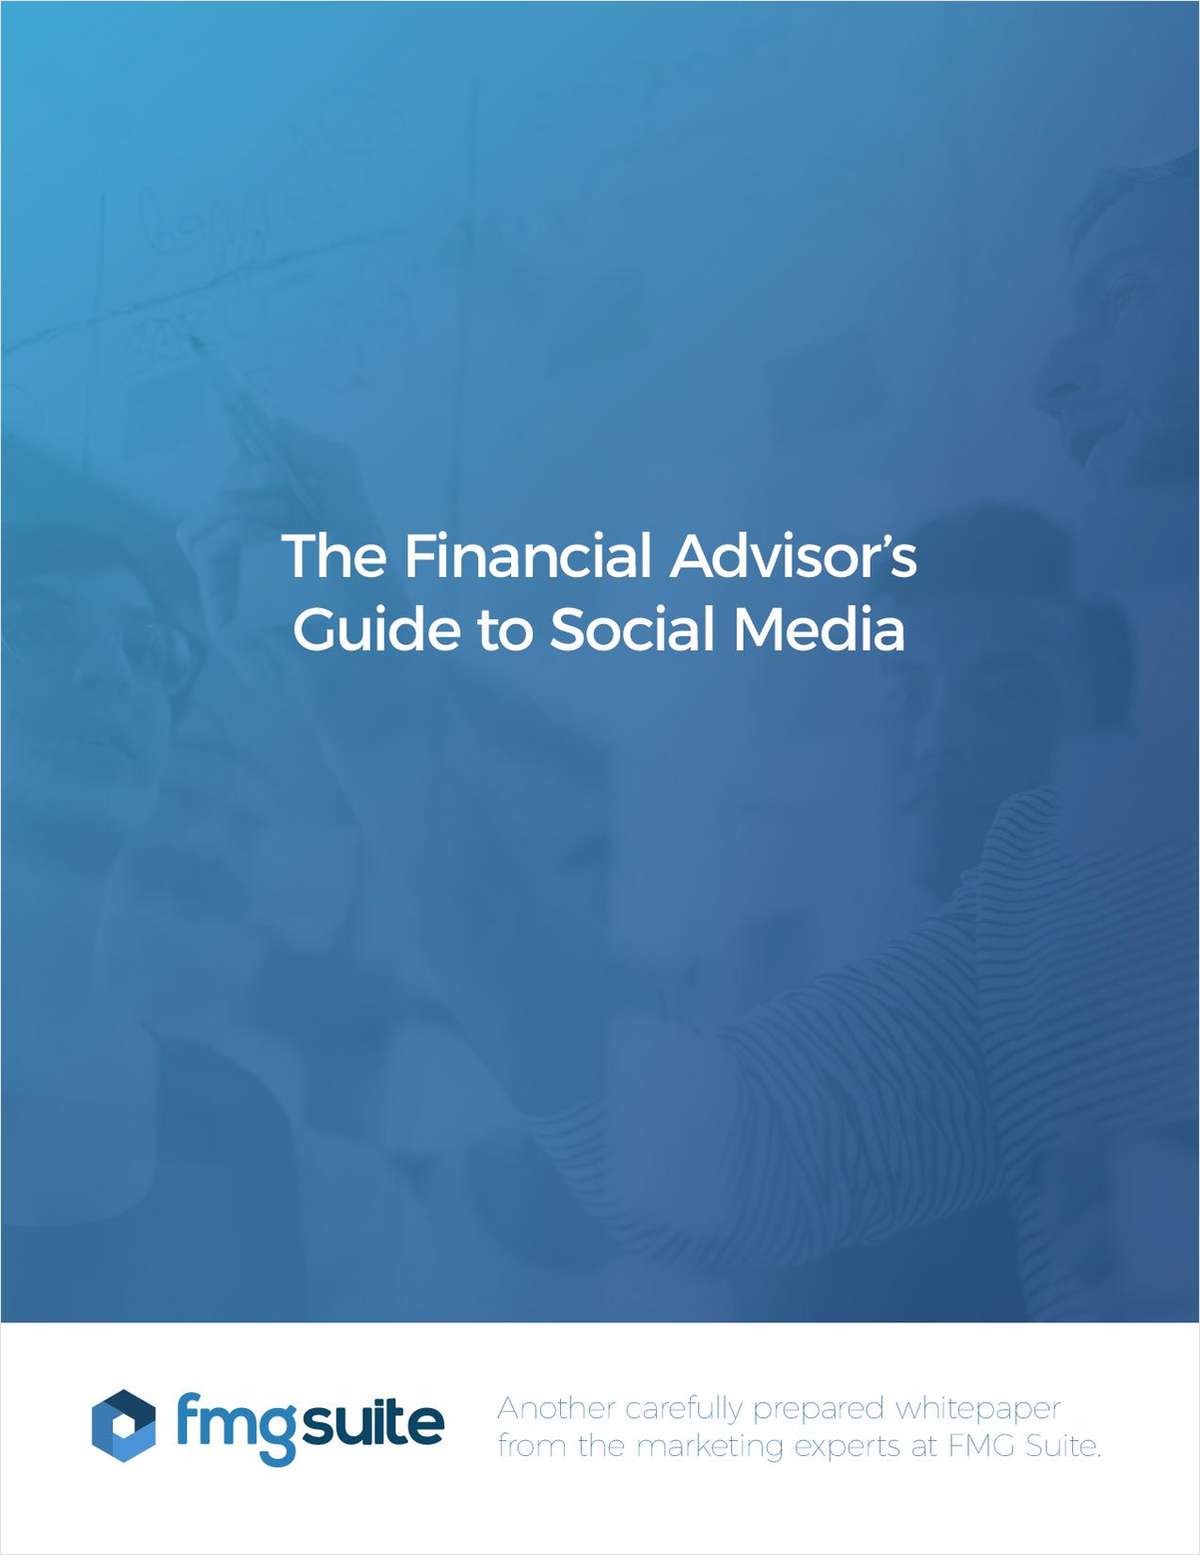 The Financial Advisor's Guide to Social Media